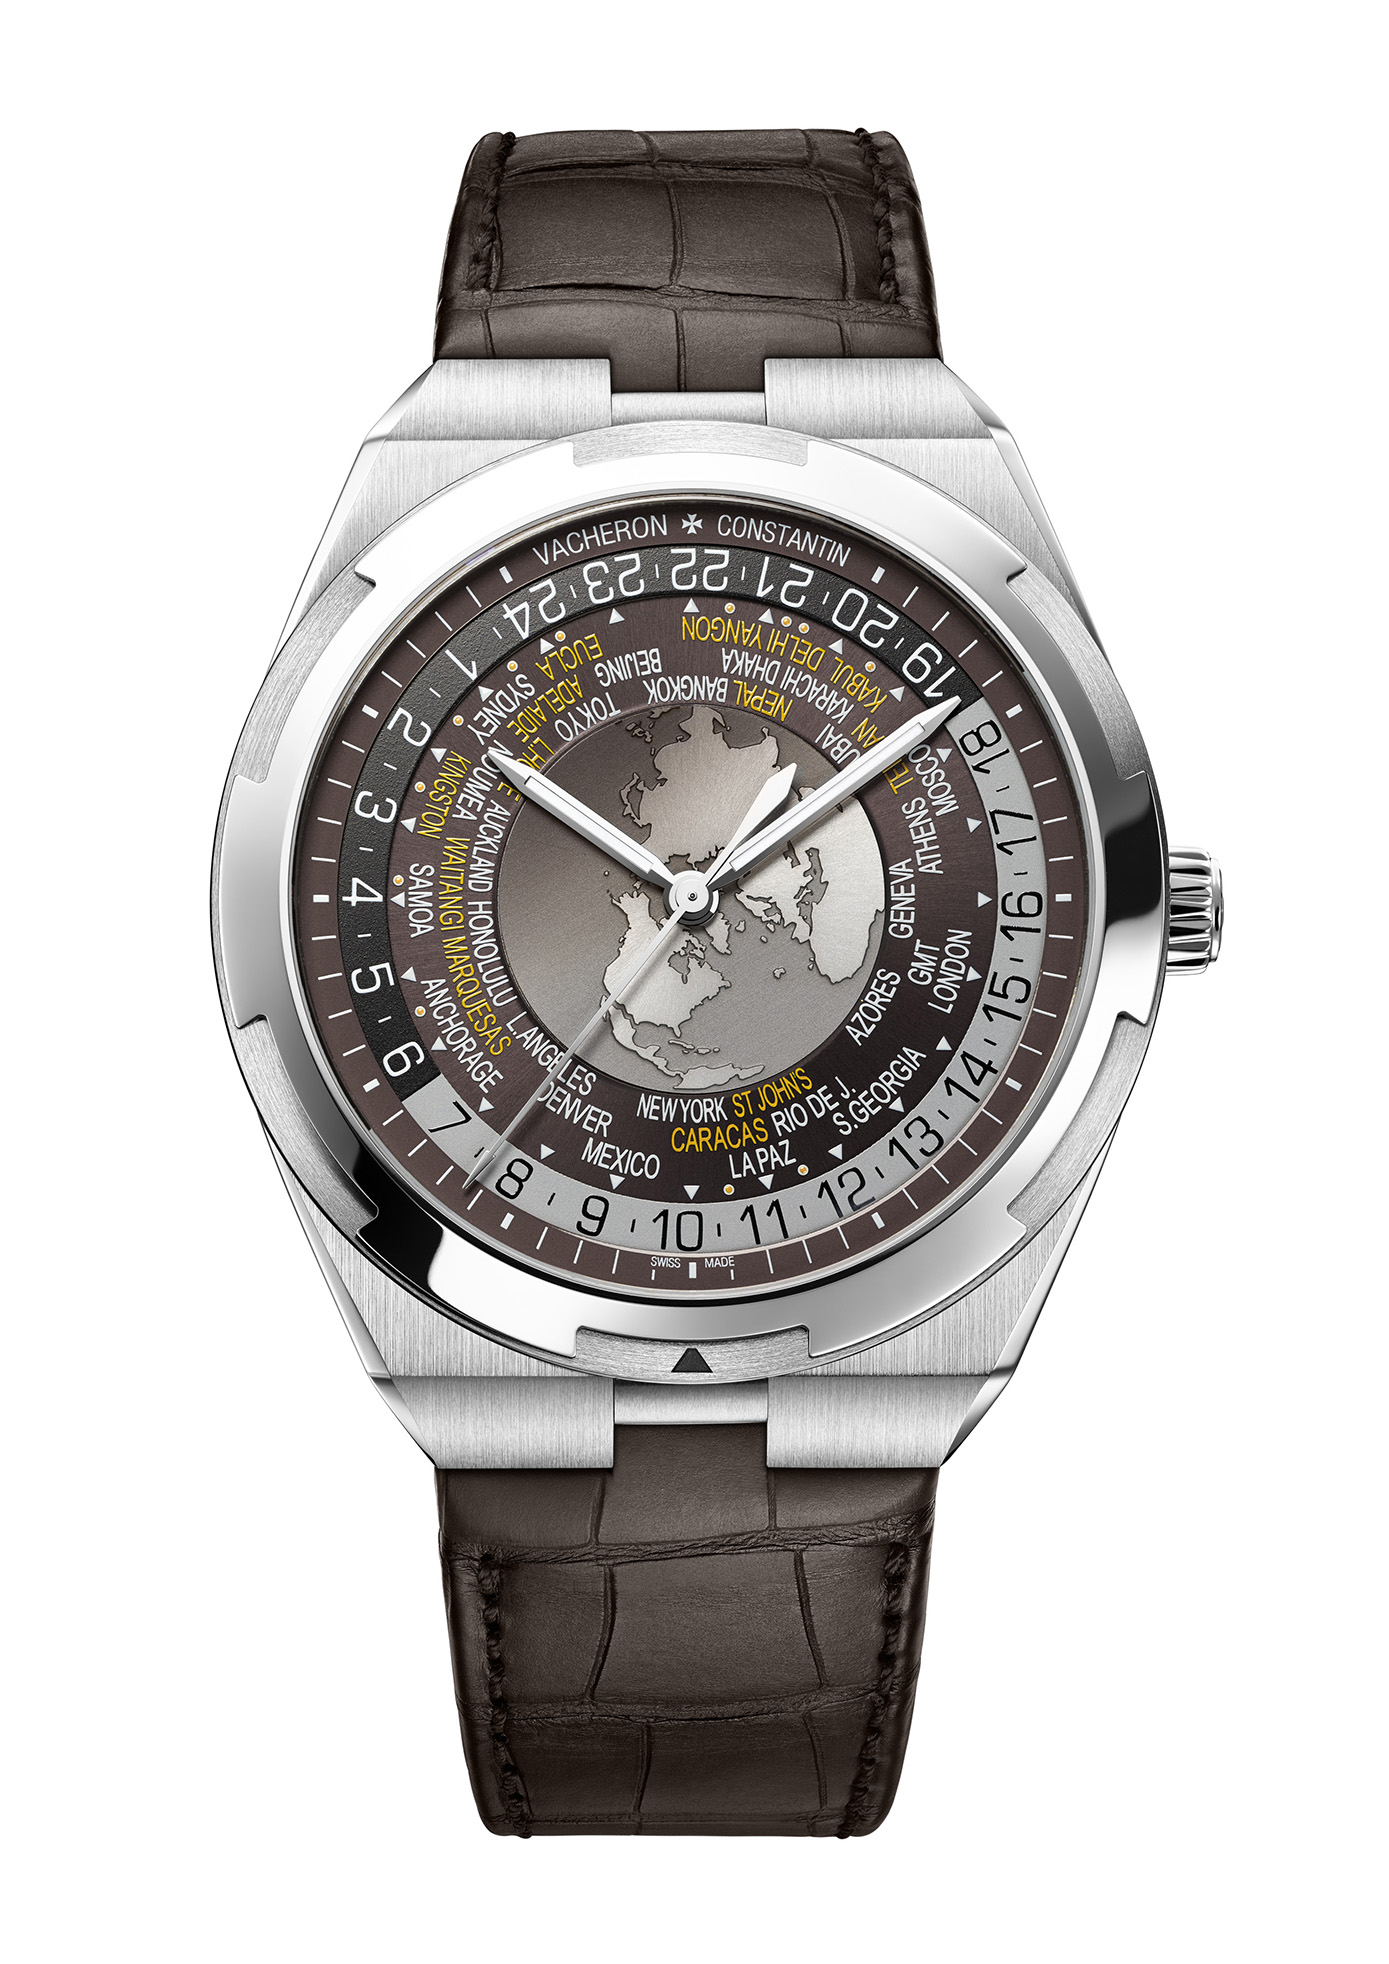 World time watches. Vacheron Constantin часы. Vacheron Constantin overseas цена.